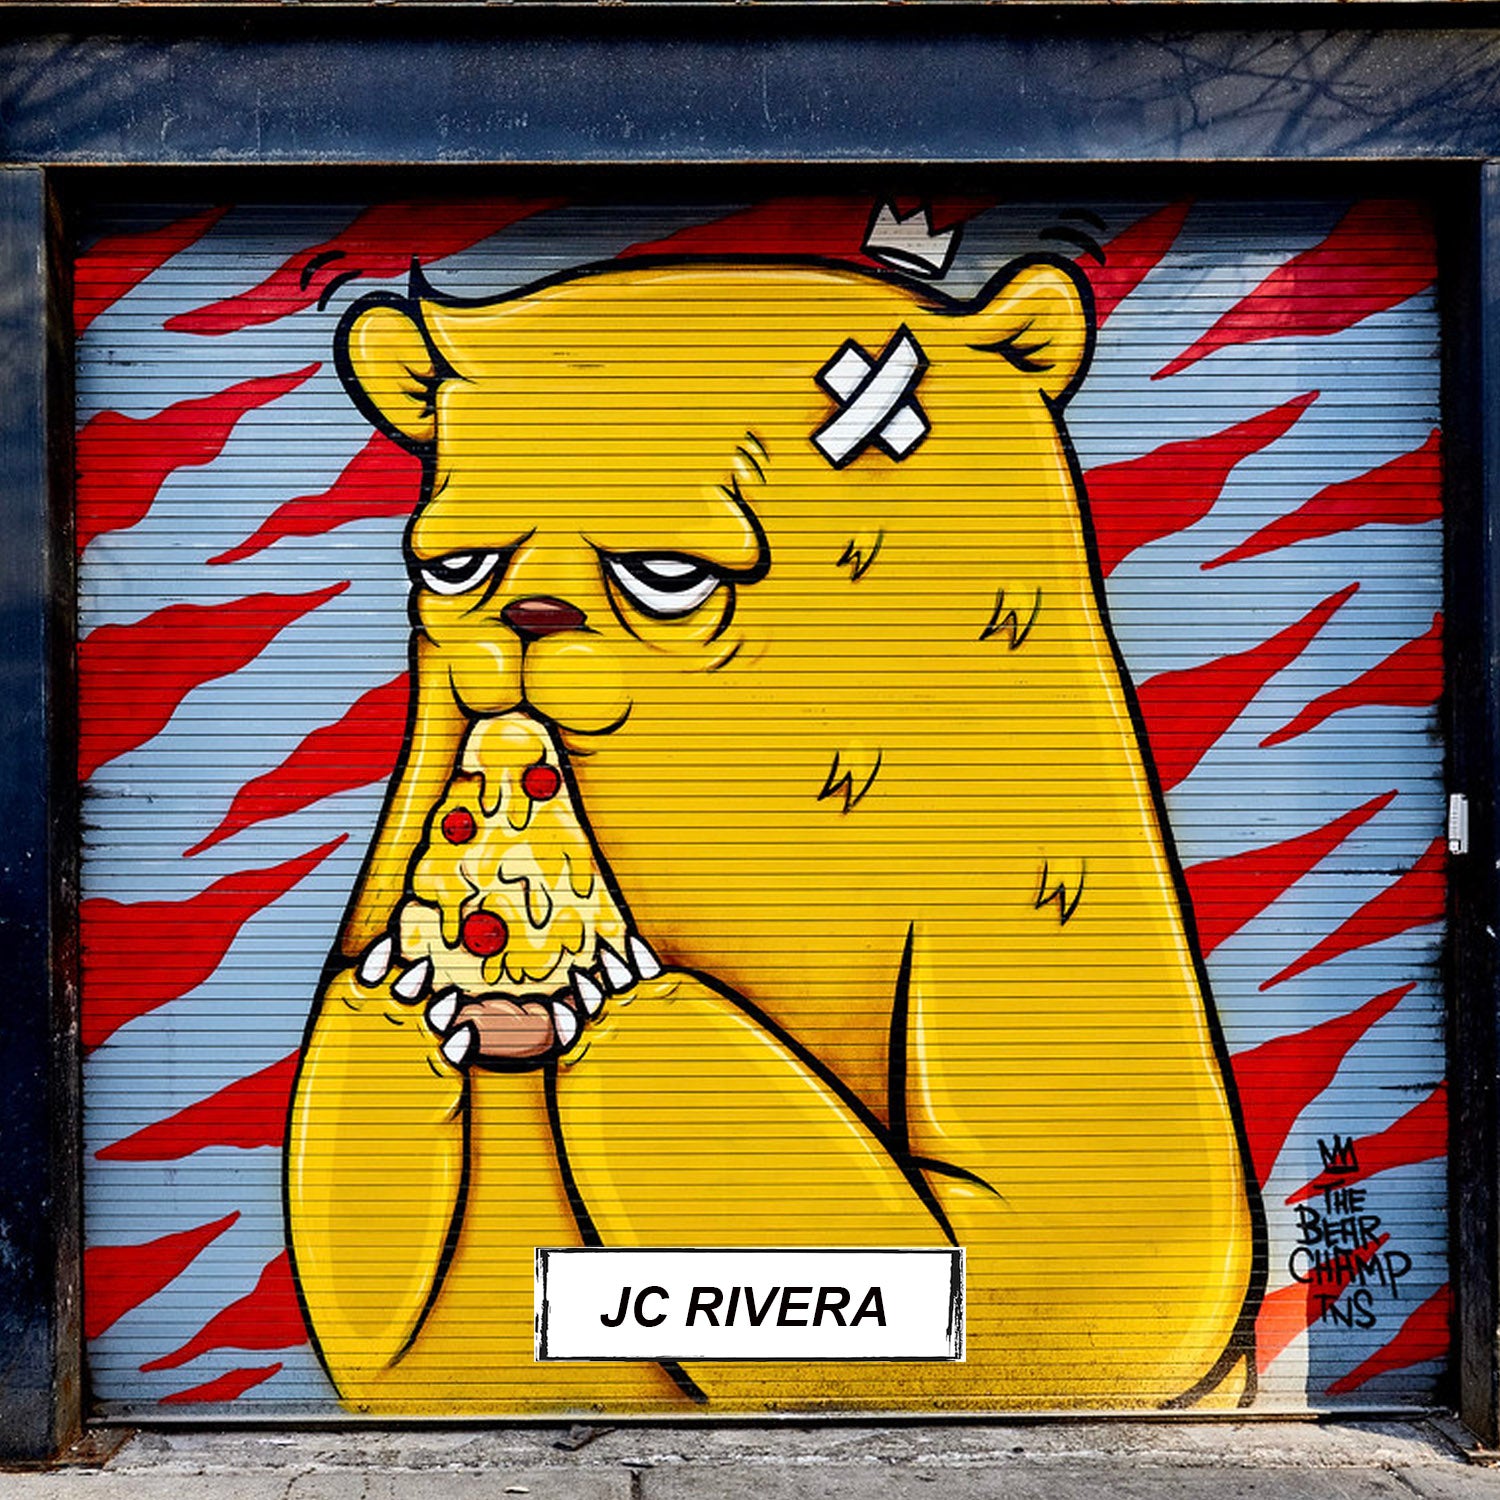 JC Rivera art for sale - The Bear Champ